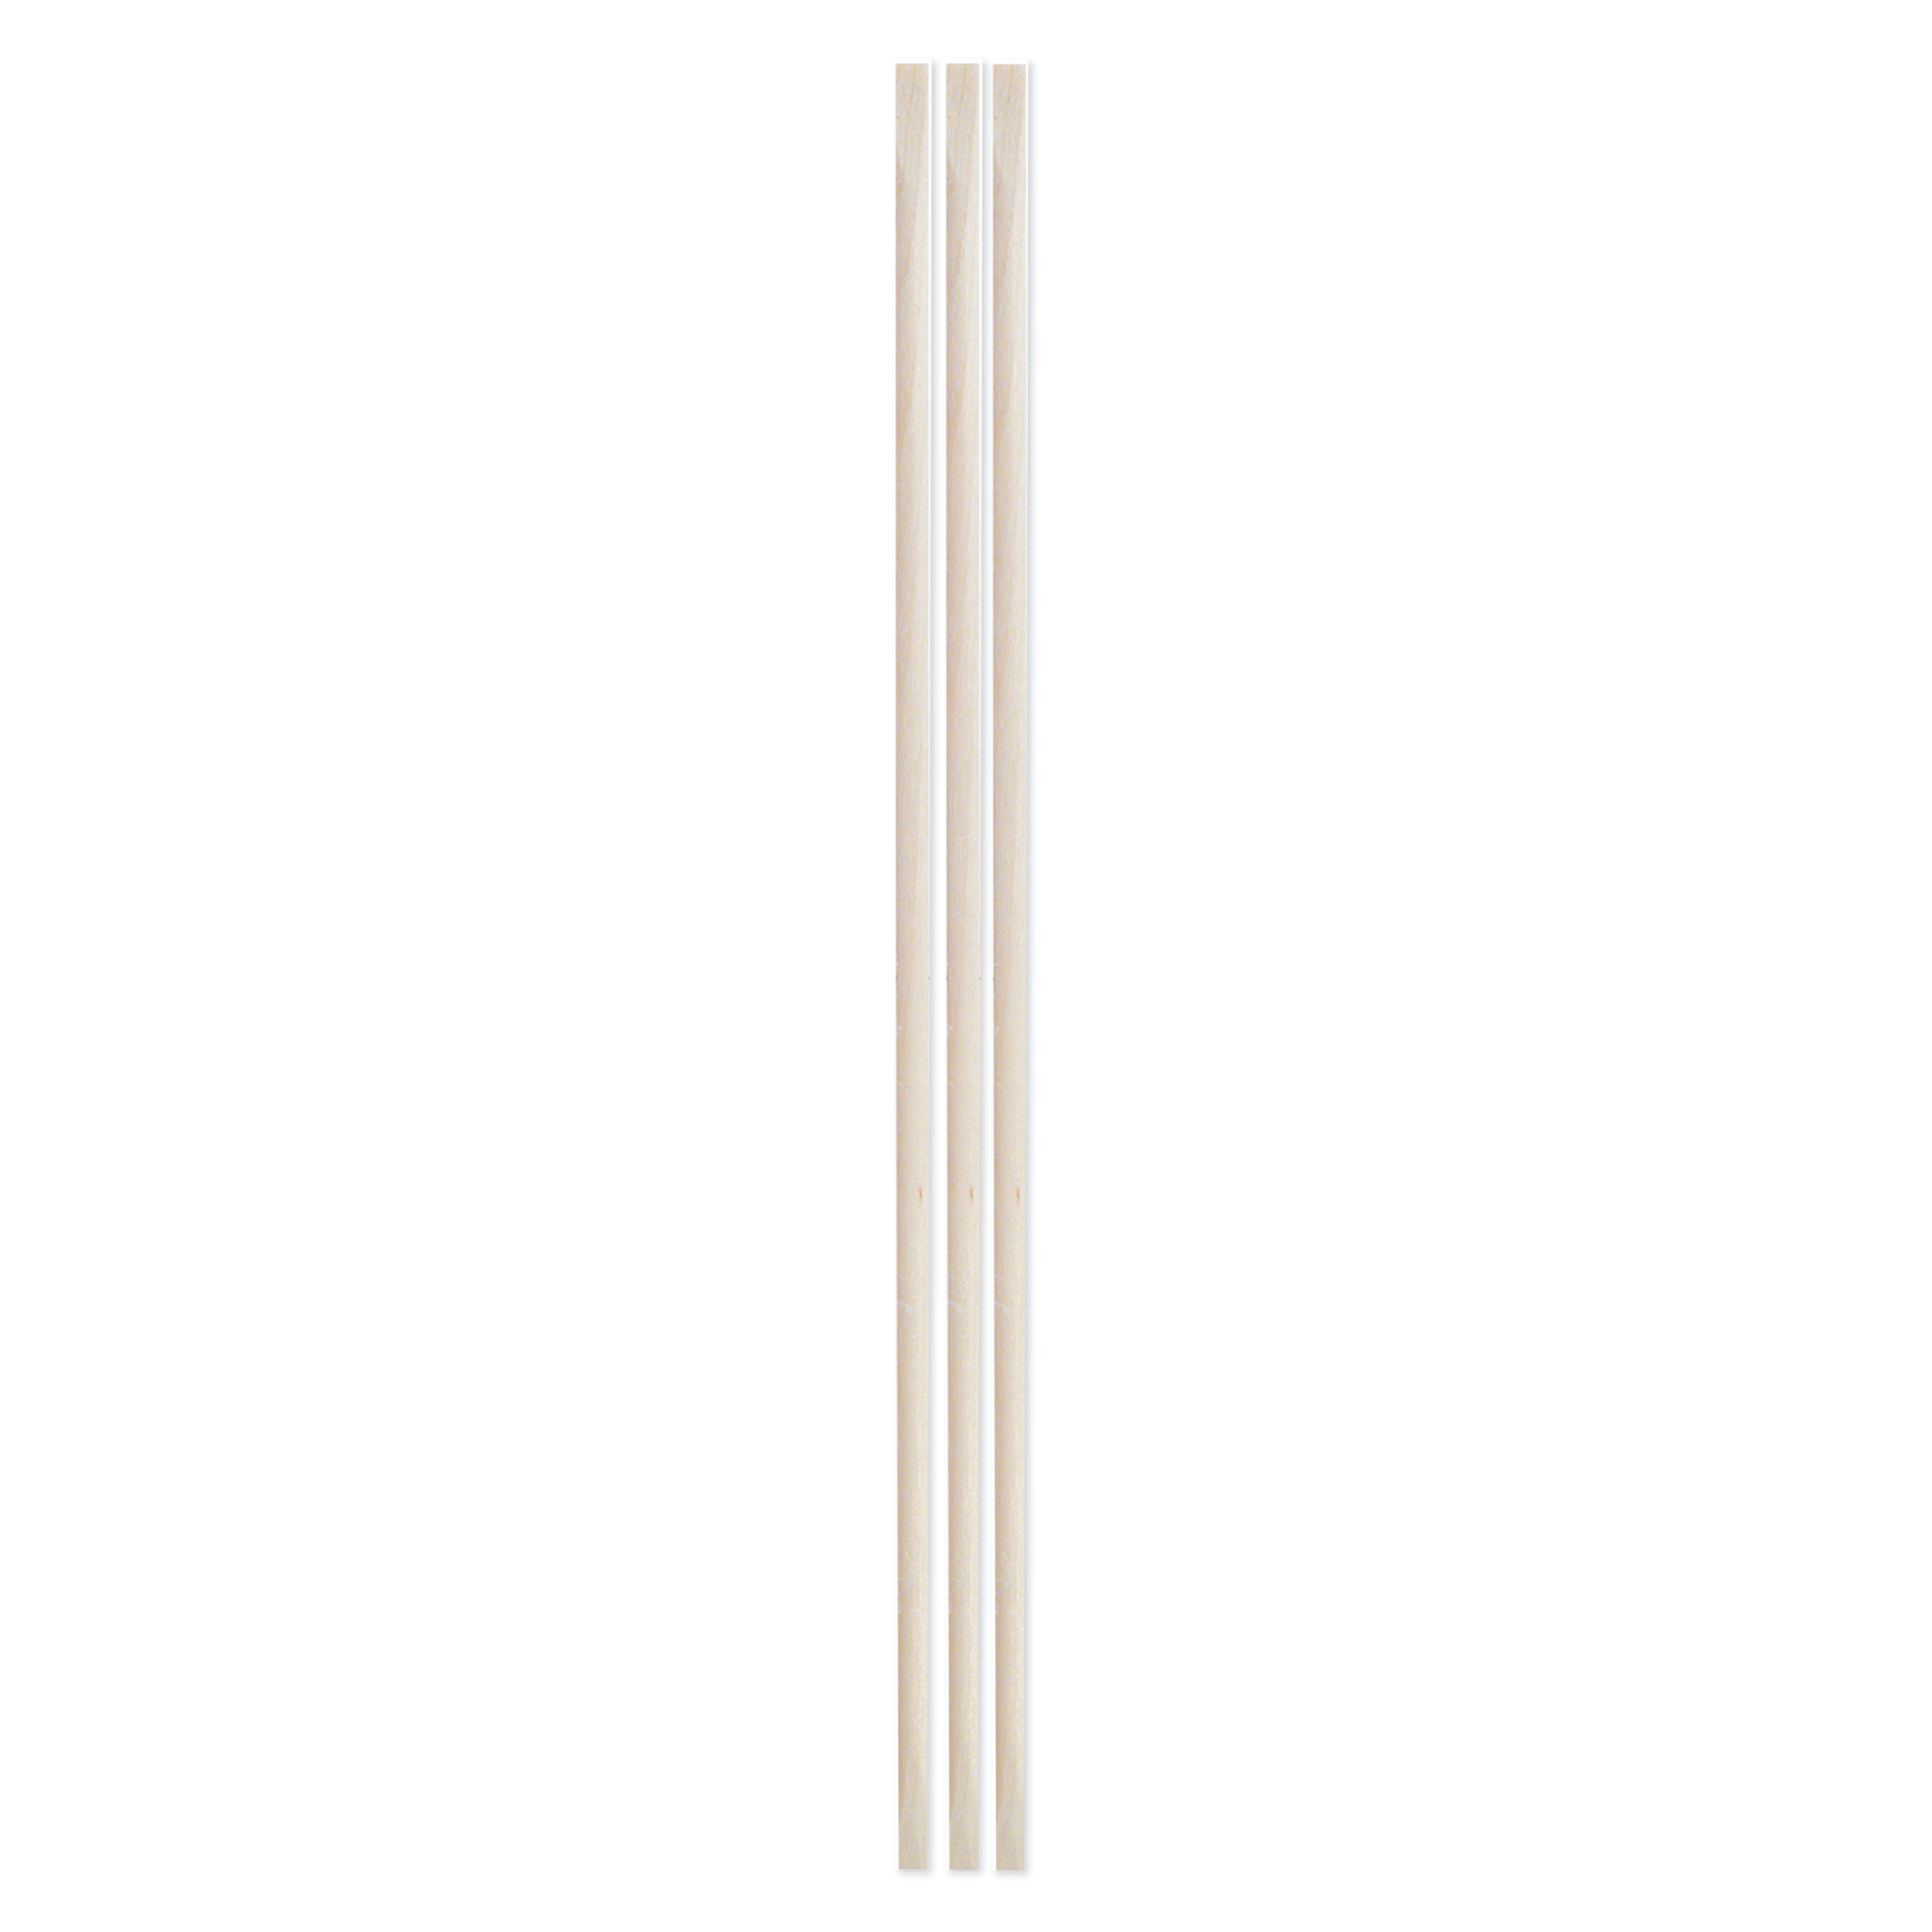 Orangewood Sticks - pack of 144